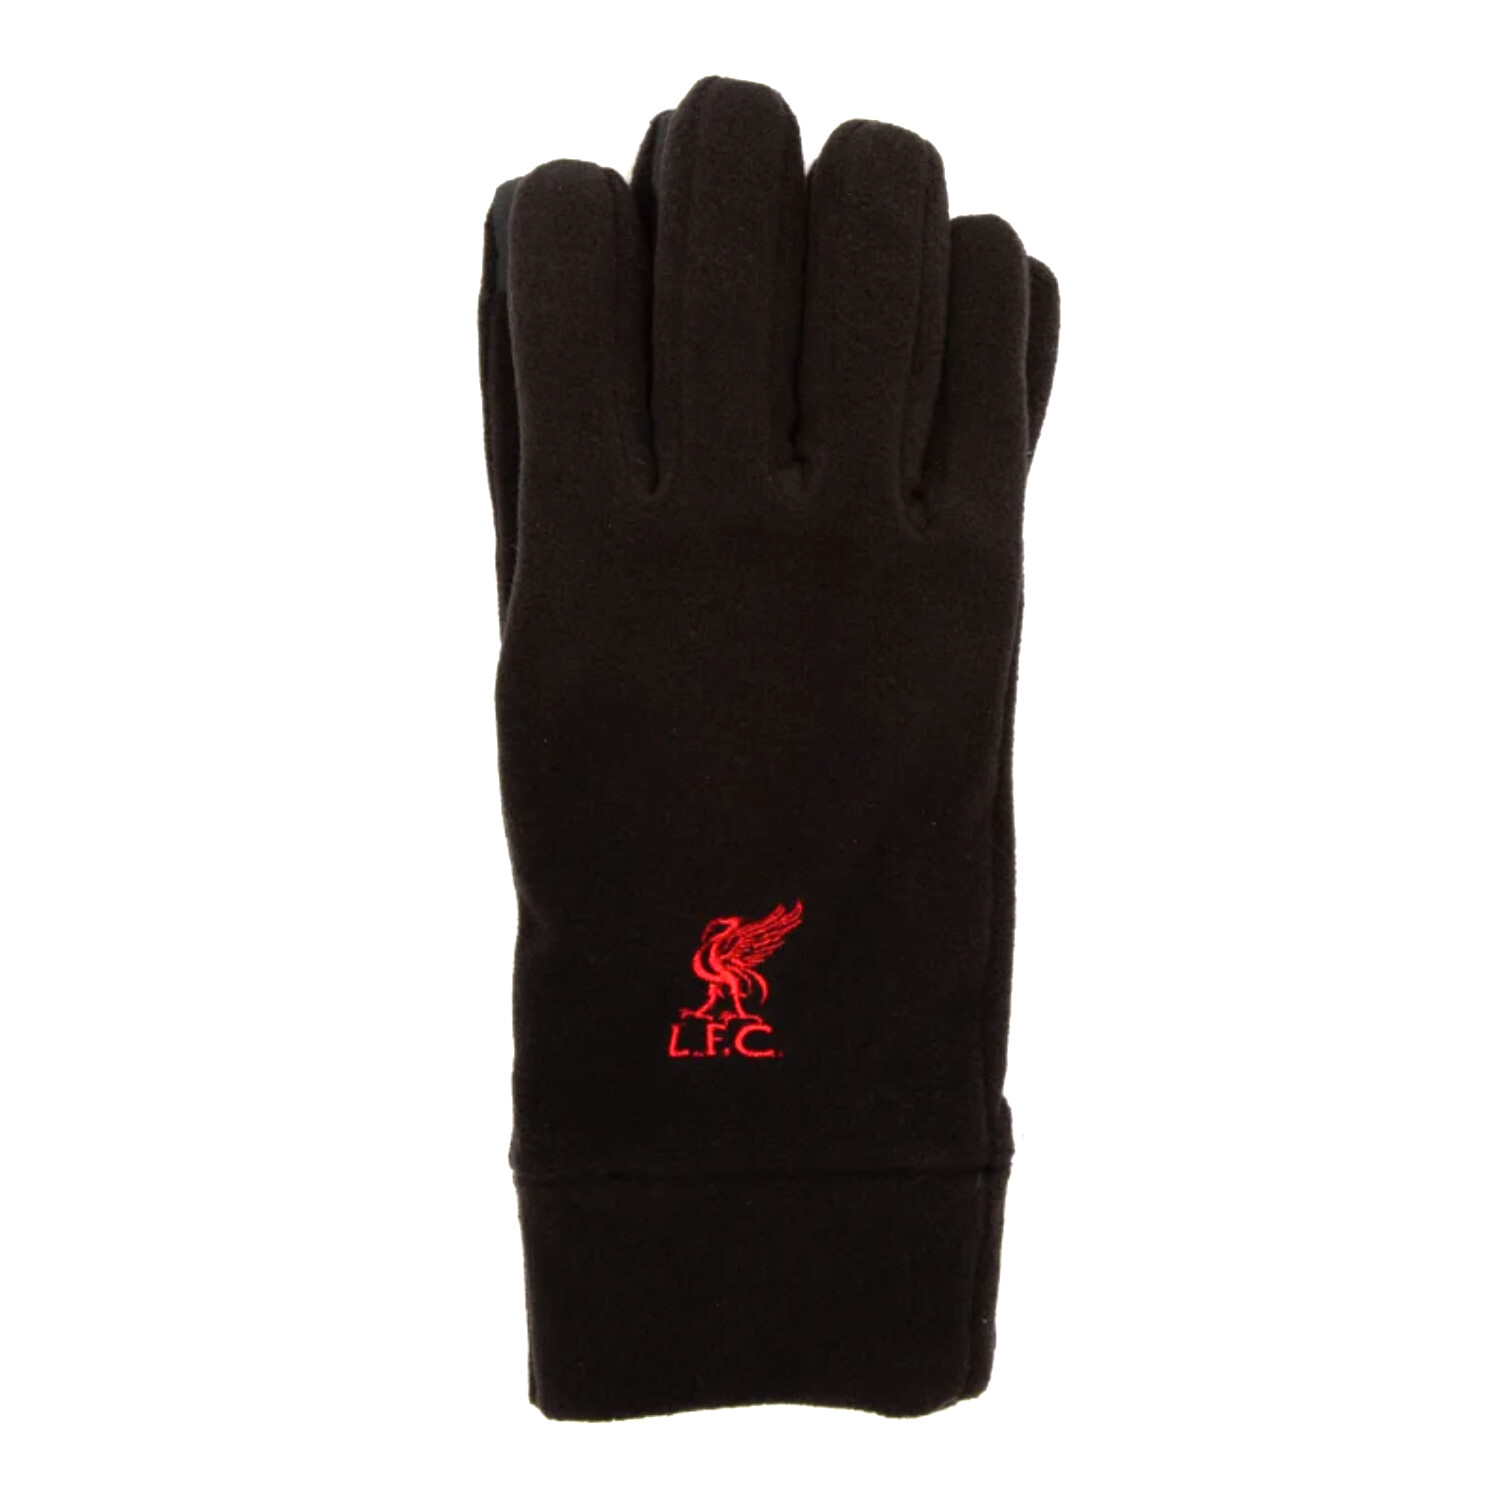 Liverpool FC Fleece Glove